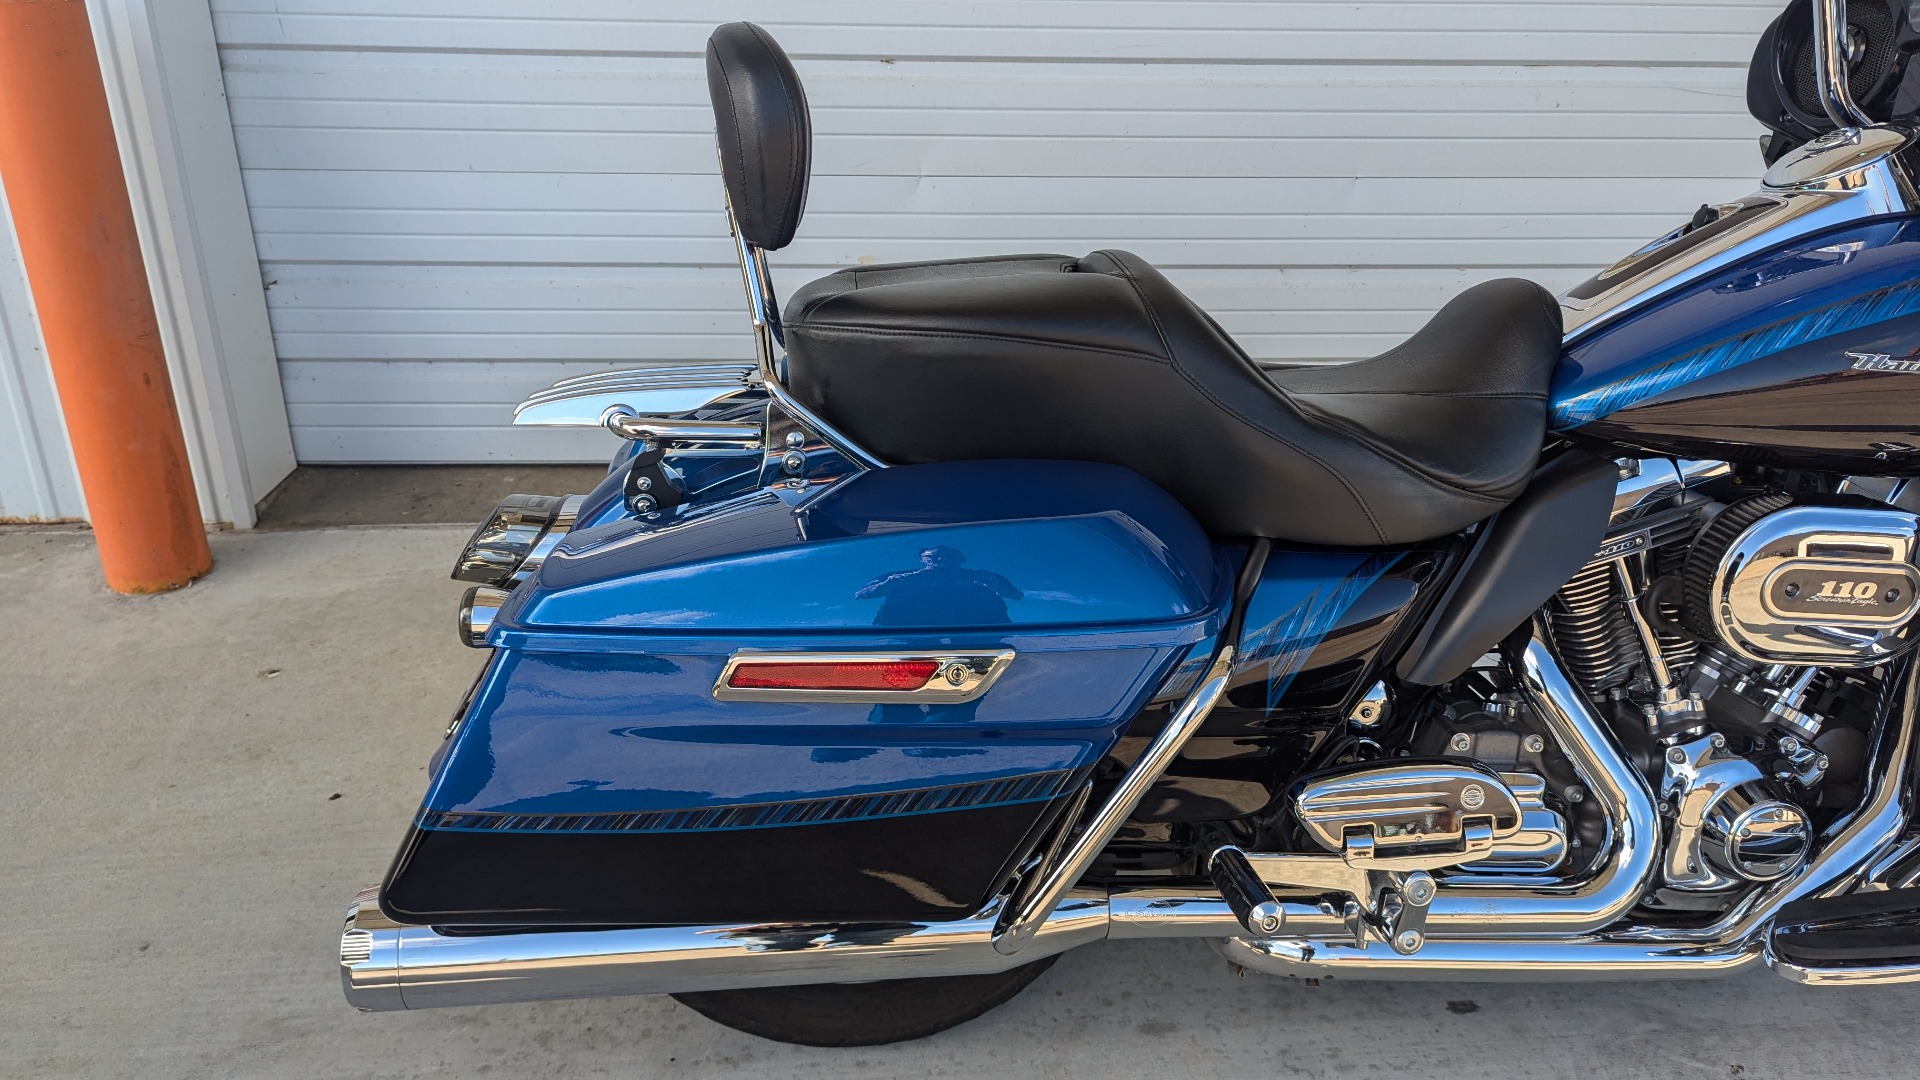 2014 Harley Davidson CVO Limited for sale in arkansas - Photo 5